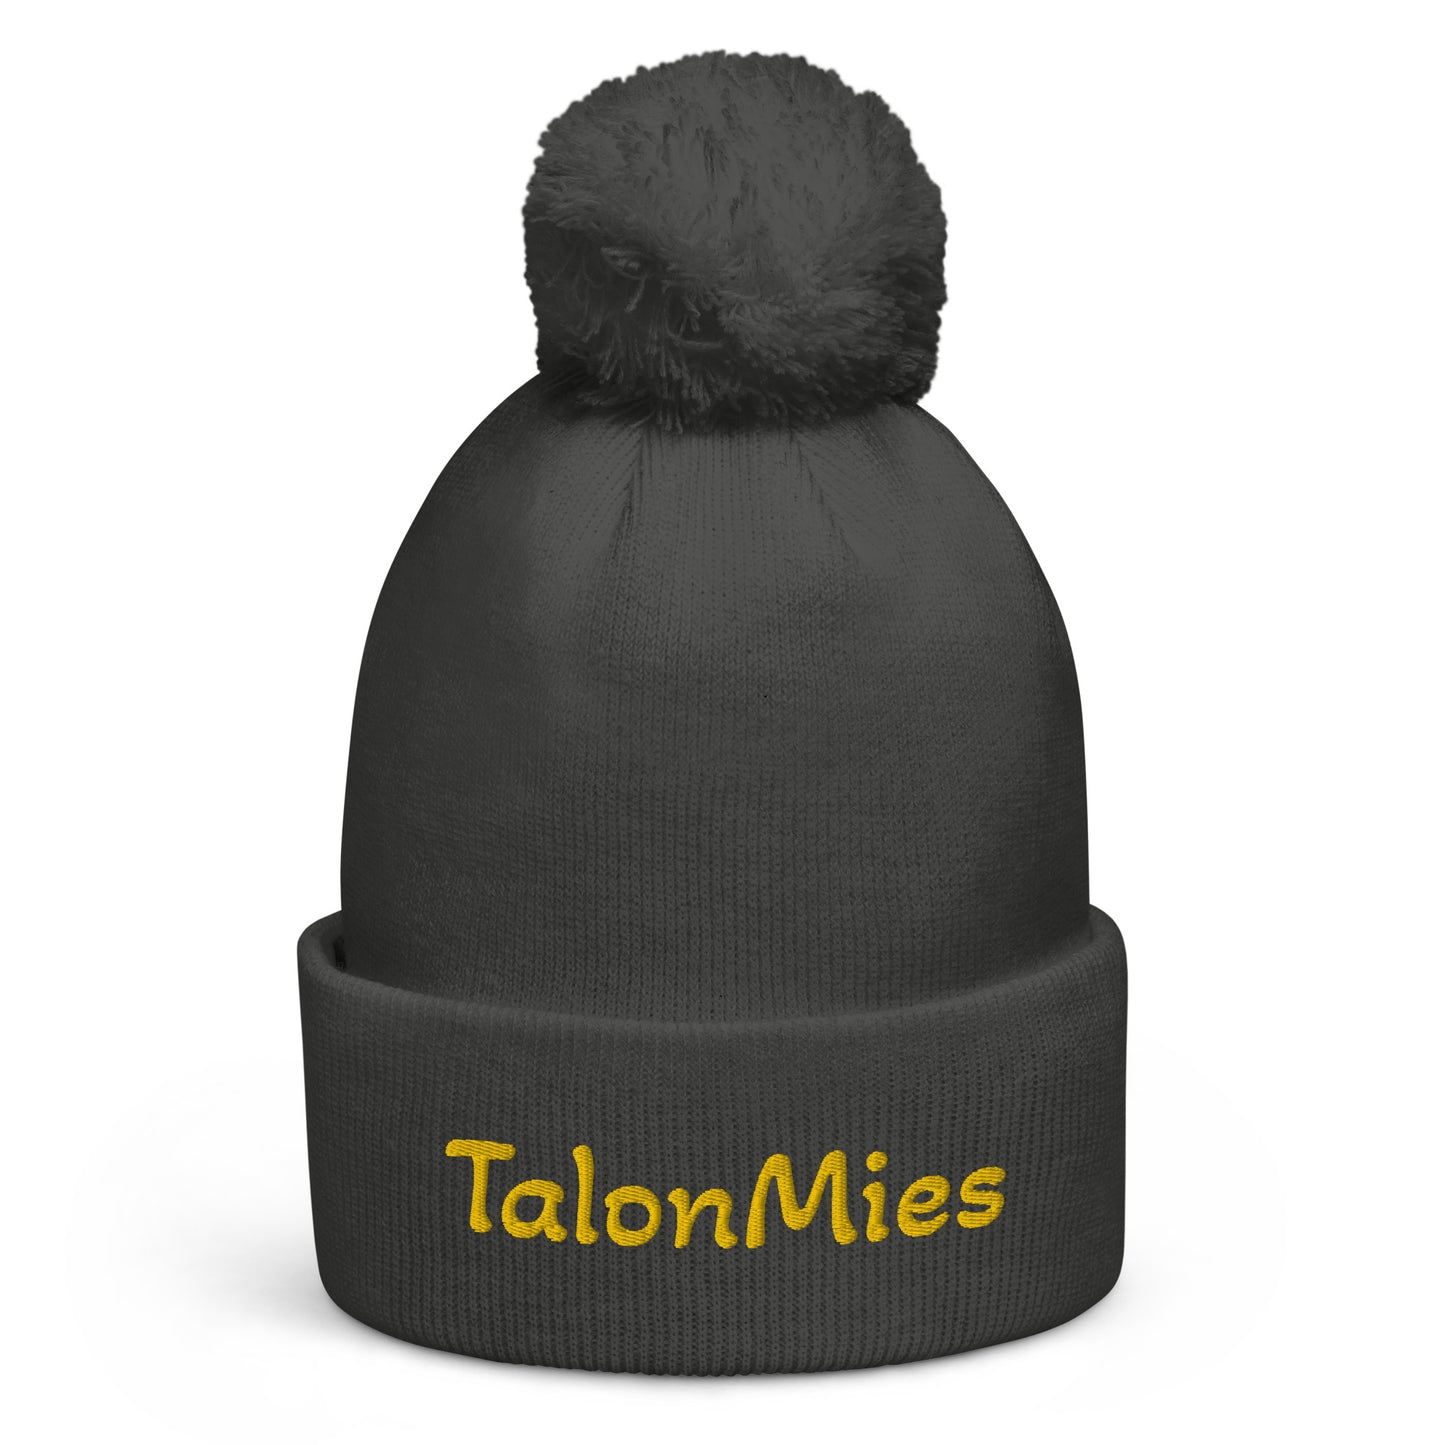 Mütze „TalonMies“ mit Quaste